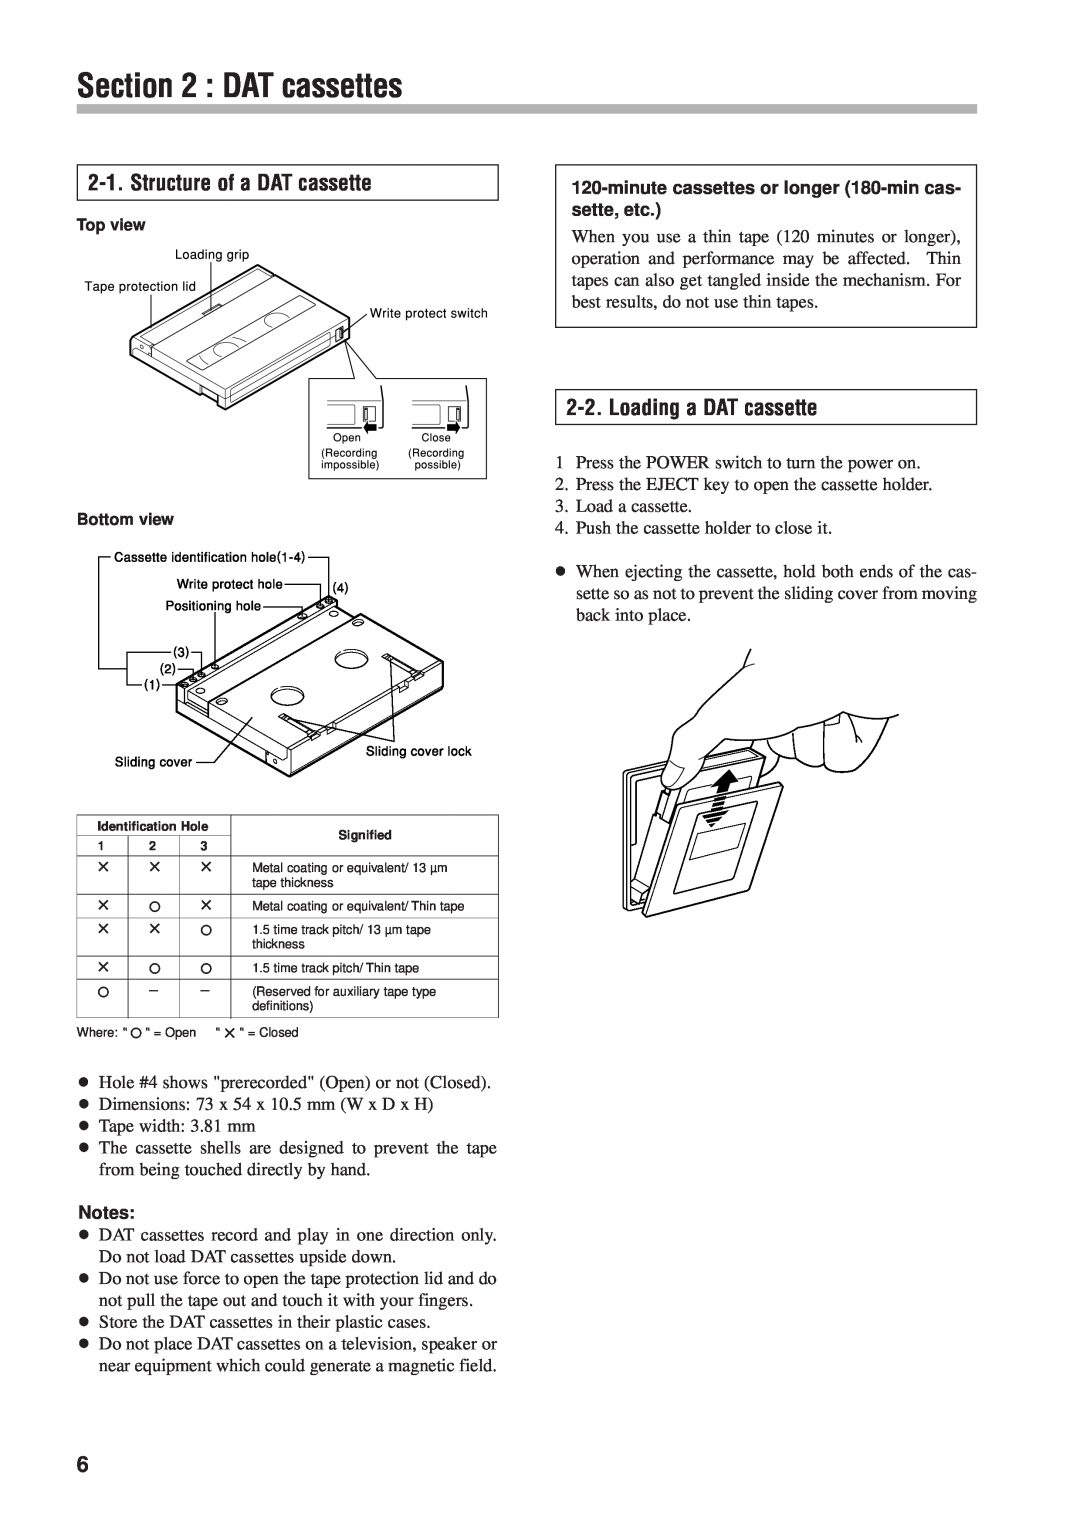 Tascam DA-302 owner manual DAT cassettes, Structure of a DAT cassette, Loading a DAT cassette 